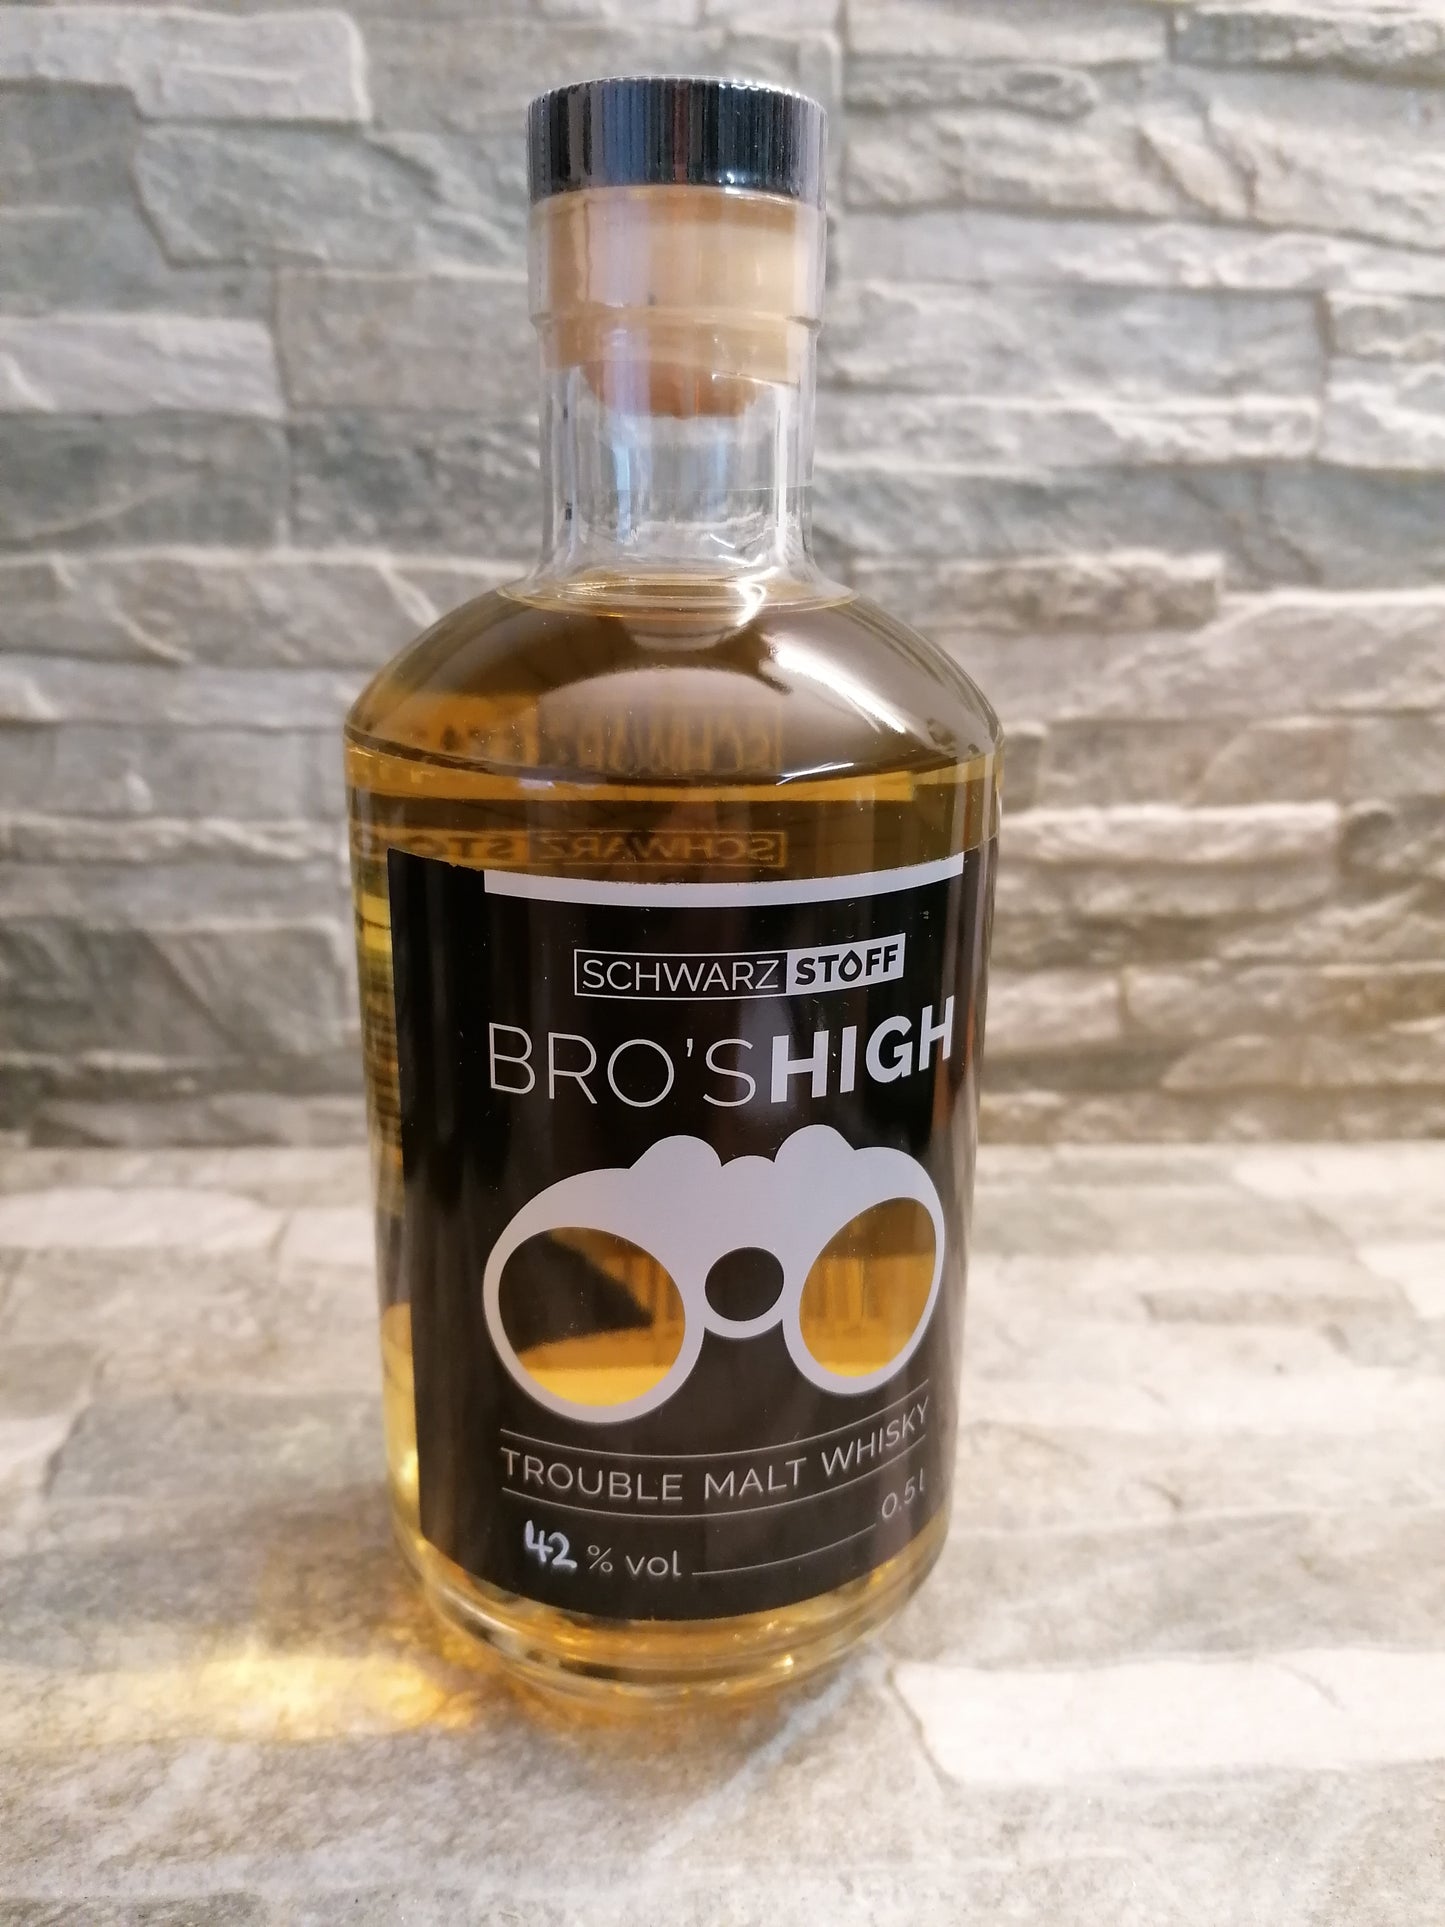 Schwarzstoff Bro’s High Trouble Malt Whisky – Bourbon Edition, 42 % vol., 0,5l